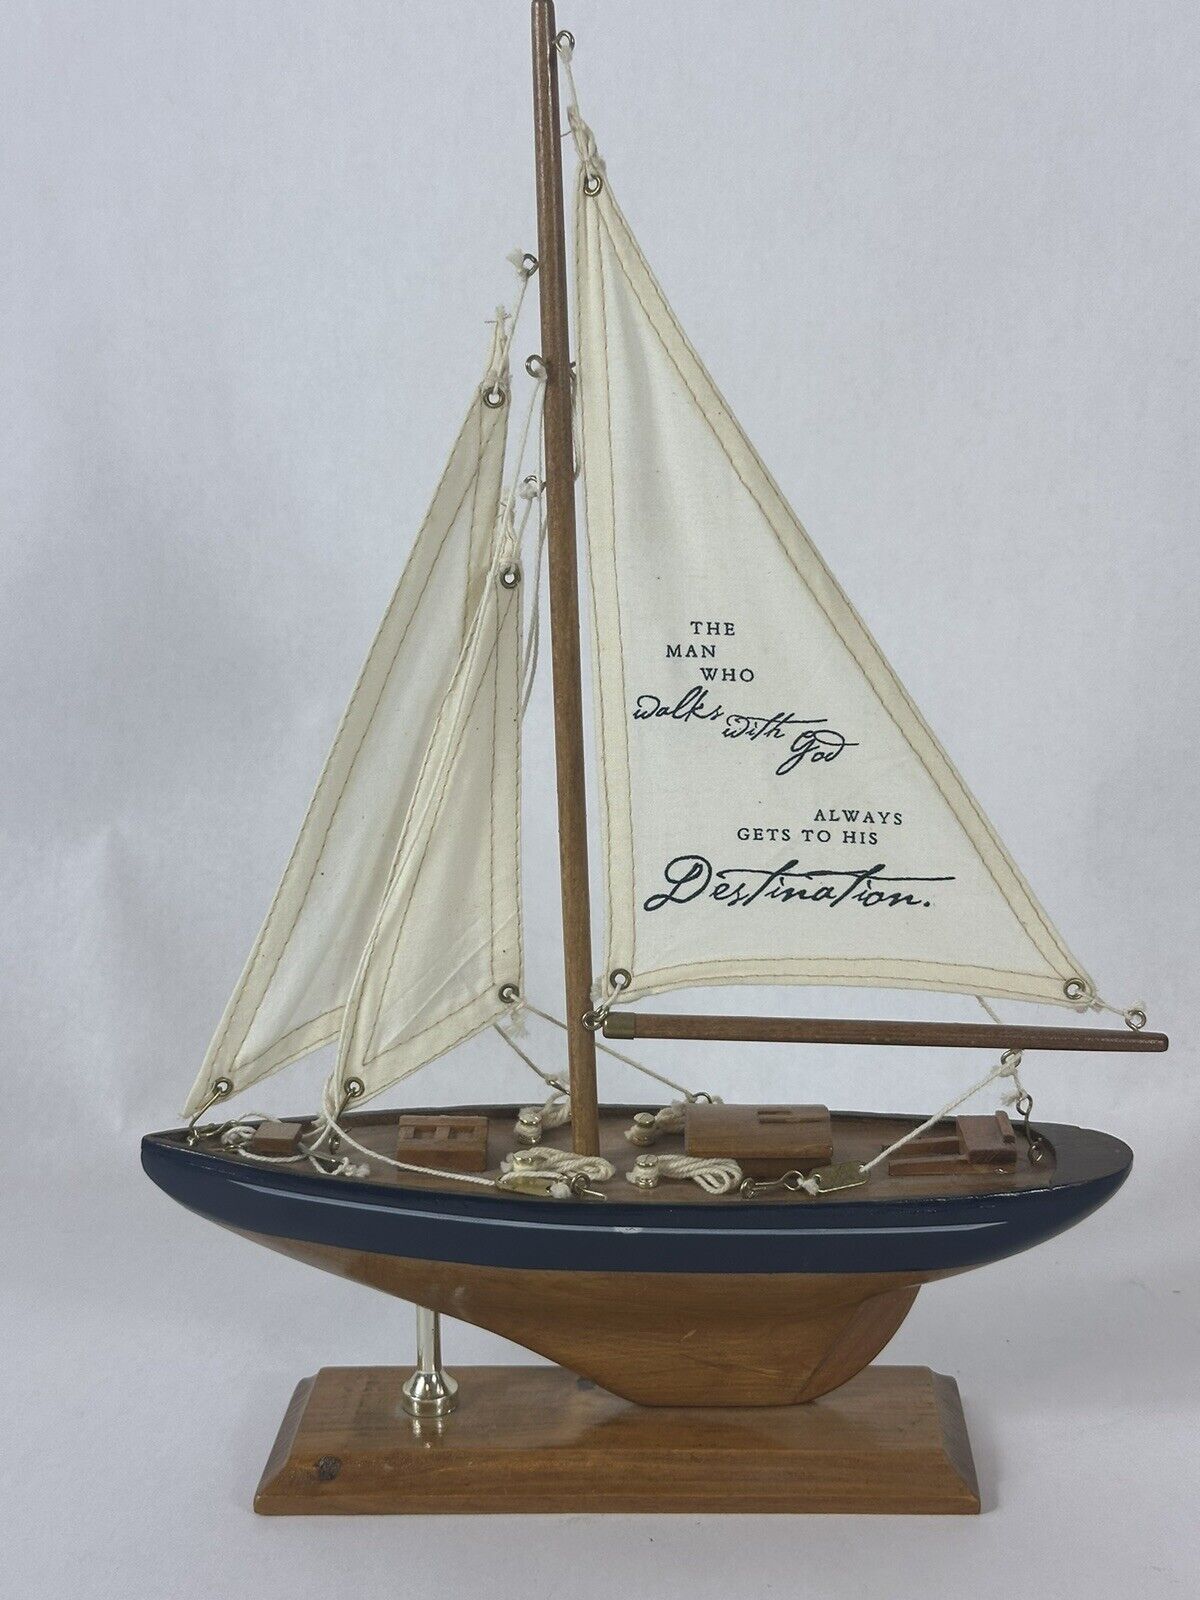 VTG Wooden Model SAILBOAT YACHT Great Details Linen Sails Inspirational Quote